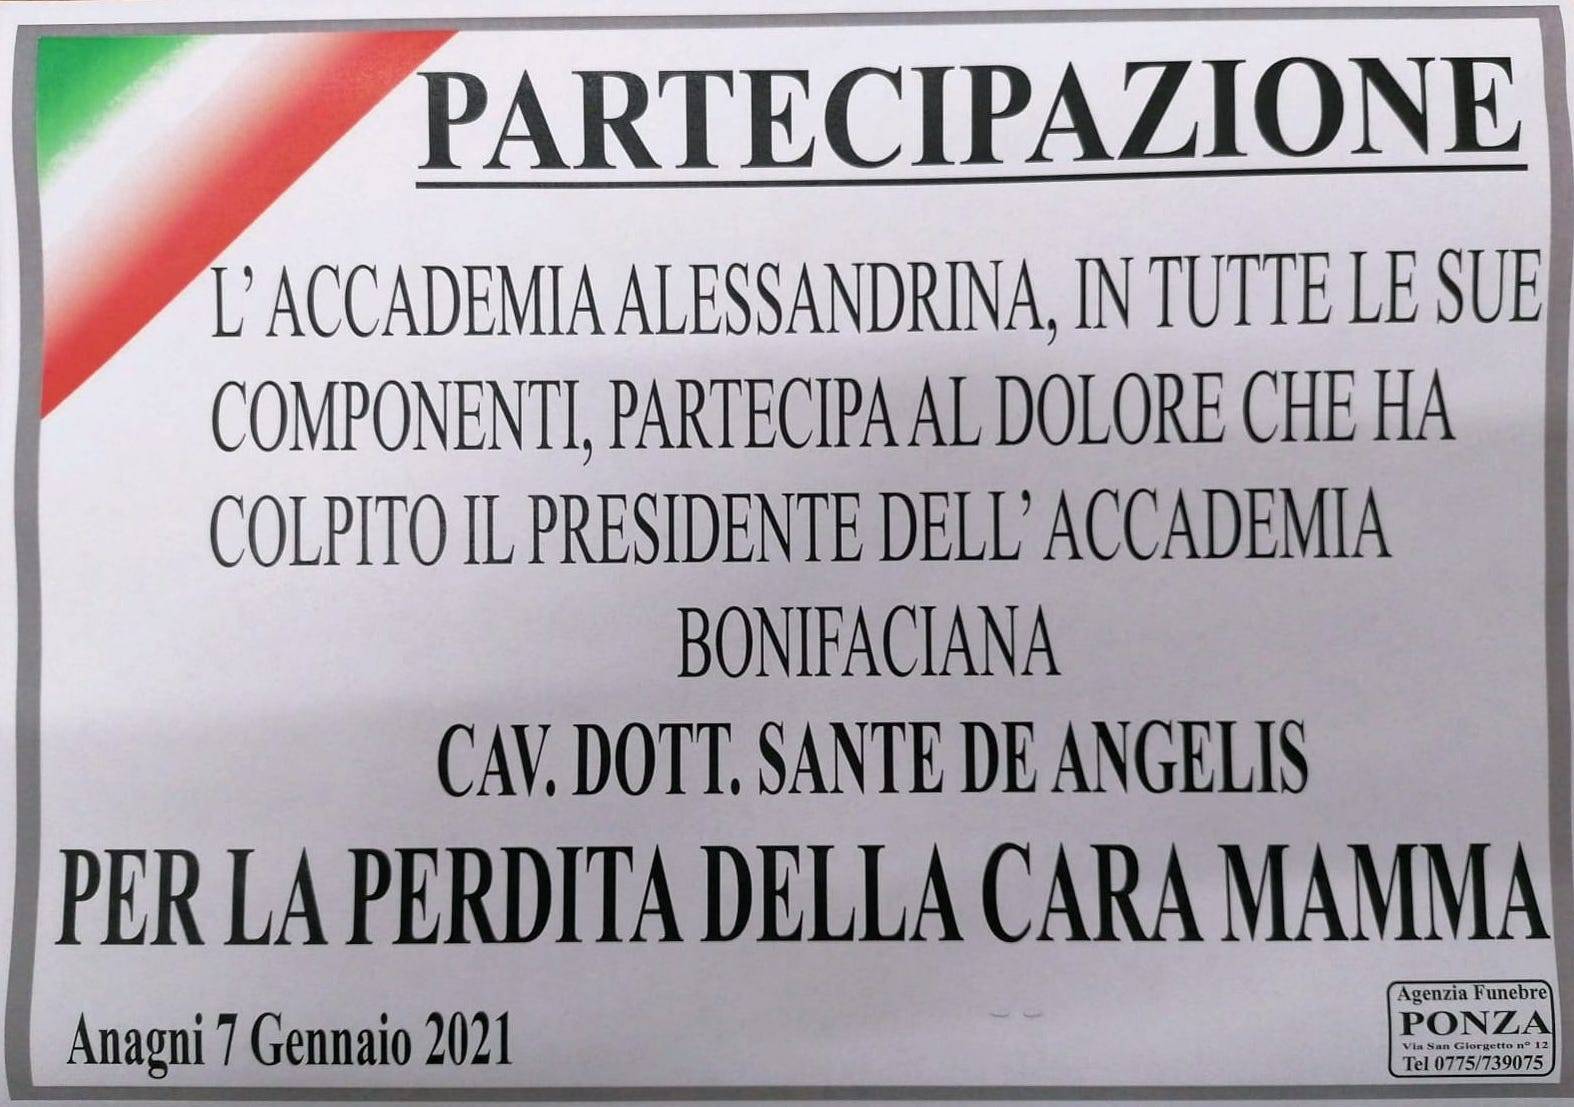 Accademia Alessandrina